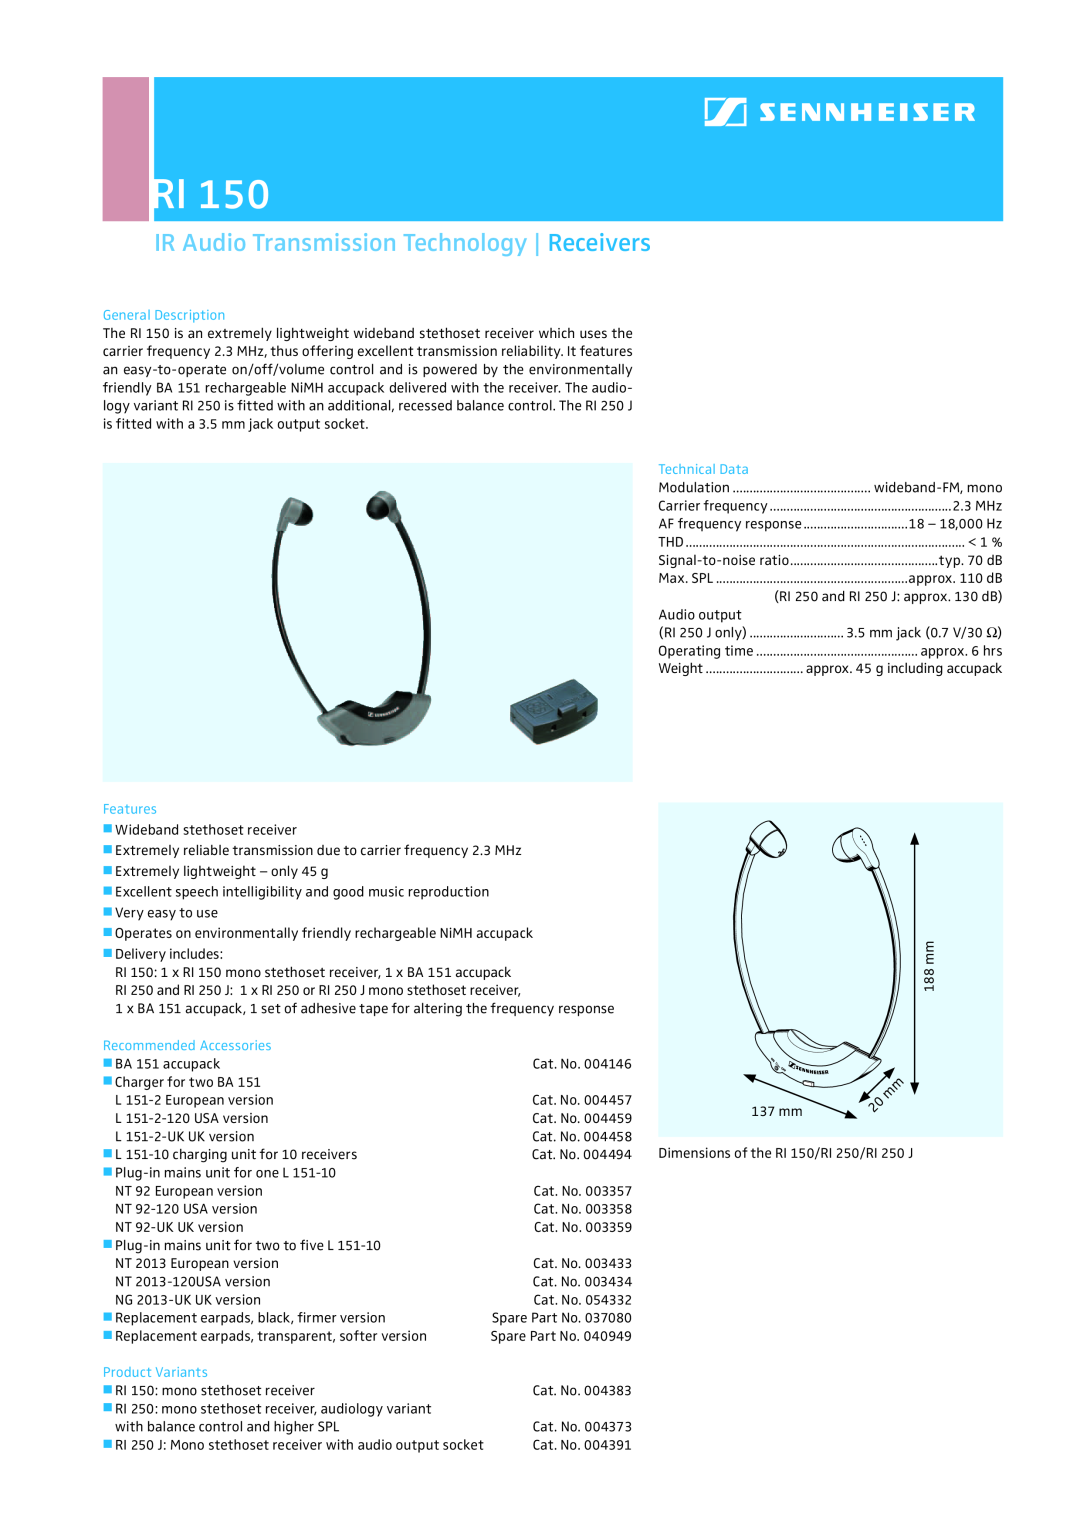 Sennheiser RI 150 dimensions IR Audio Transmission Technology Receivers, General Description, Features, Product Variants 